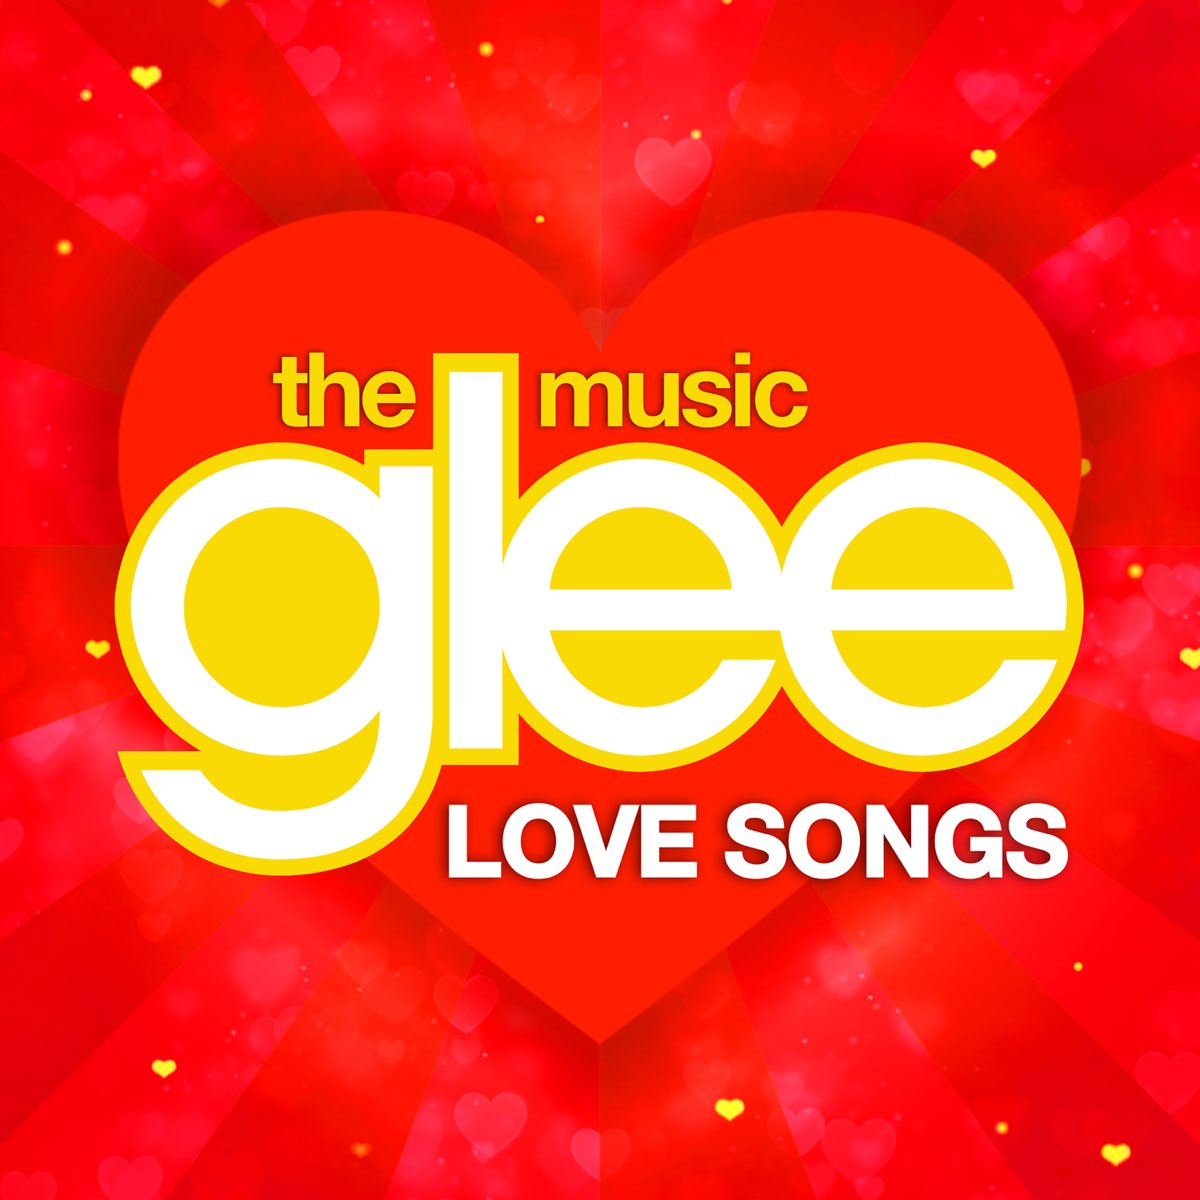 Glee Love Songs - Album by Glee Cast - Apple Music